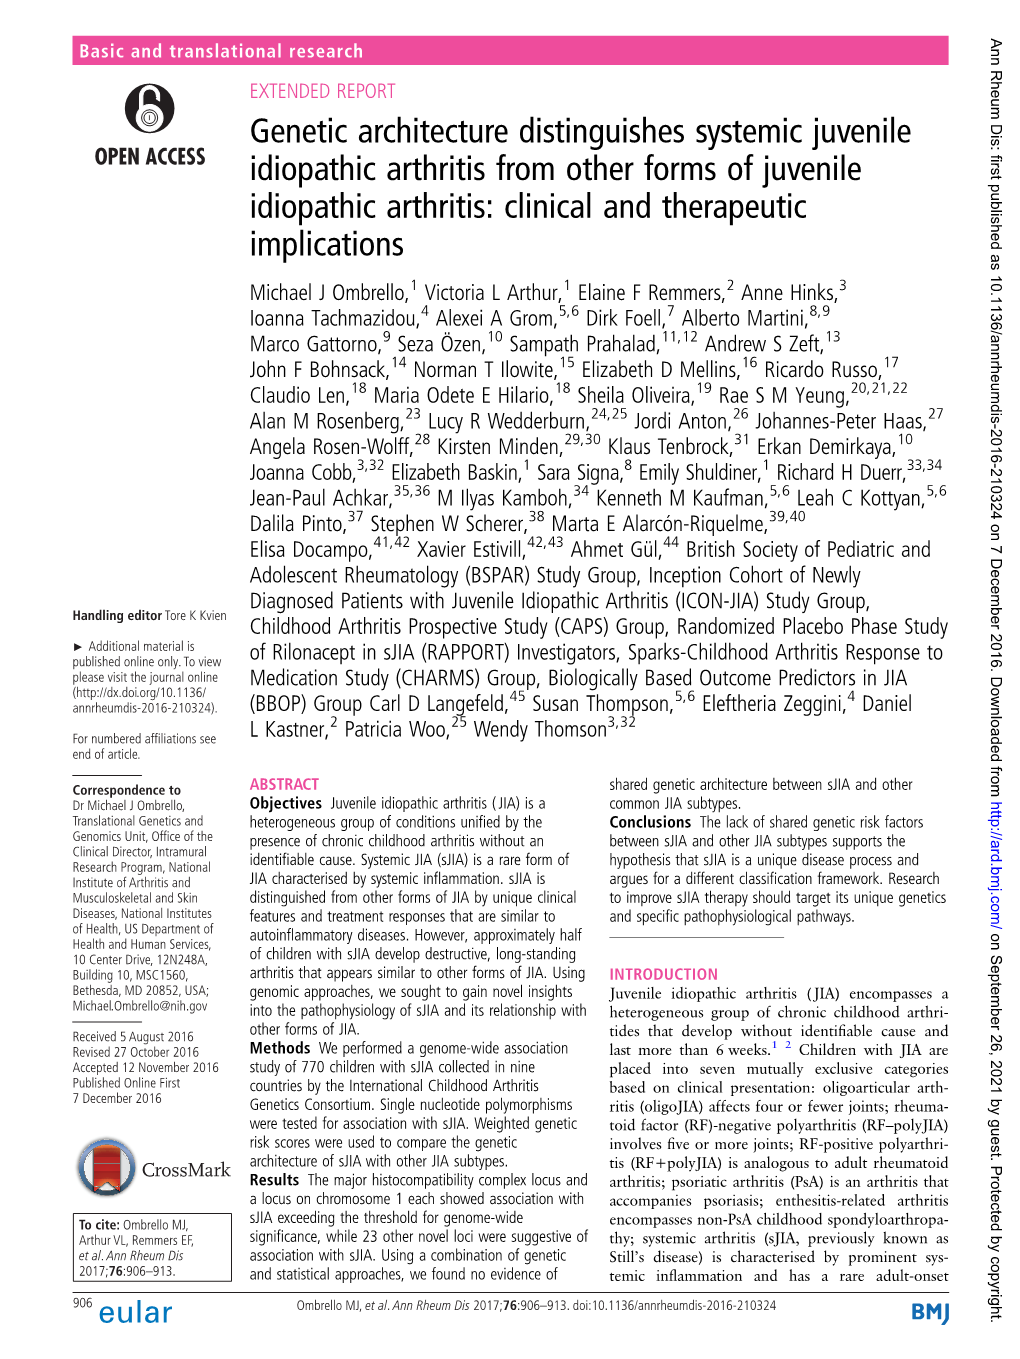 Genetic Architecture Distinguishes Systemic Juvenile Idiopathic Arthritis